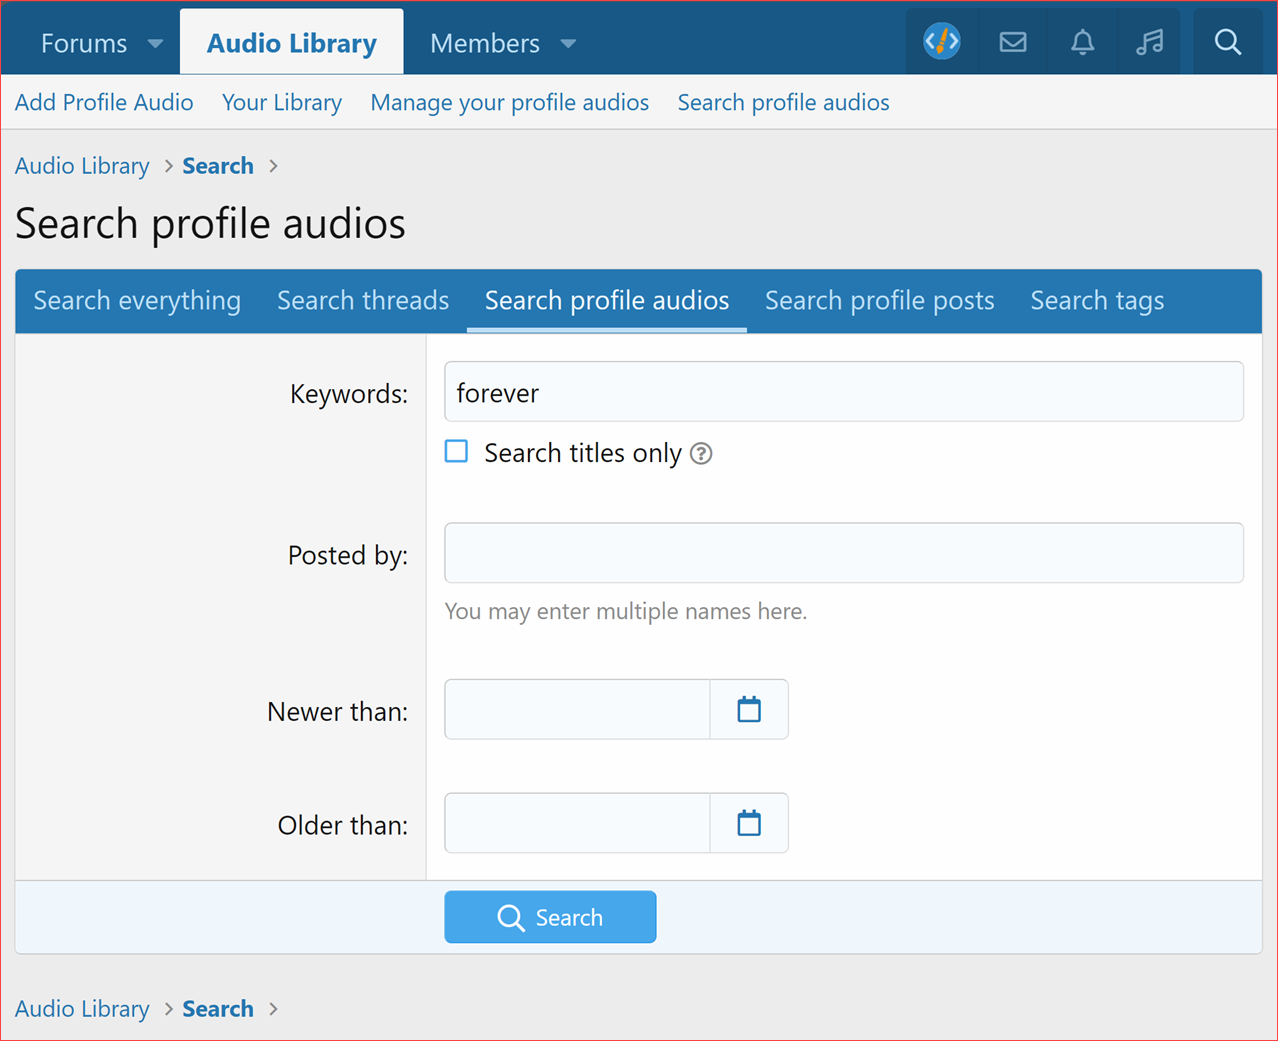 Profile-Audio-v2-Search-Profile-Audios.png